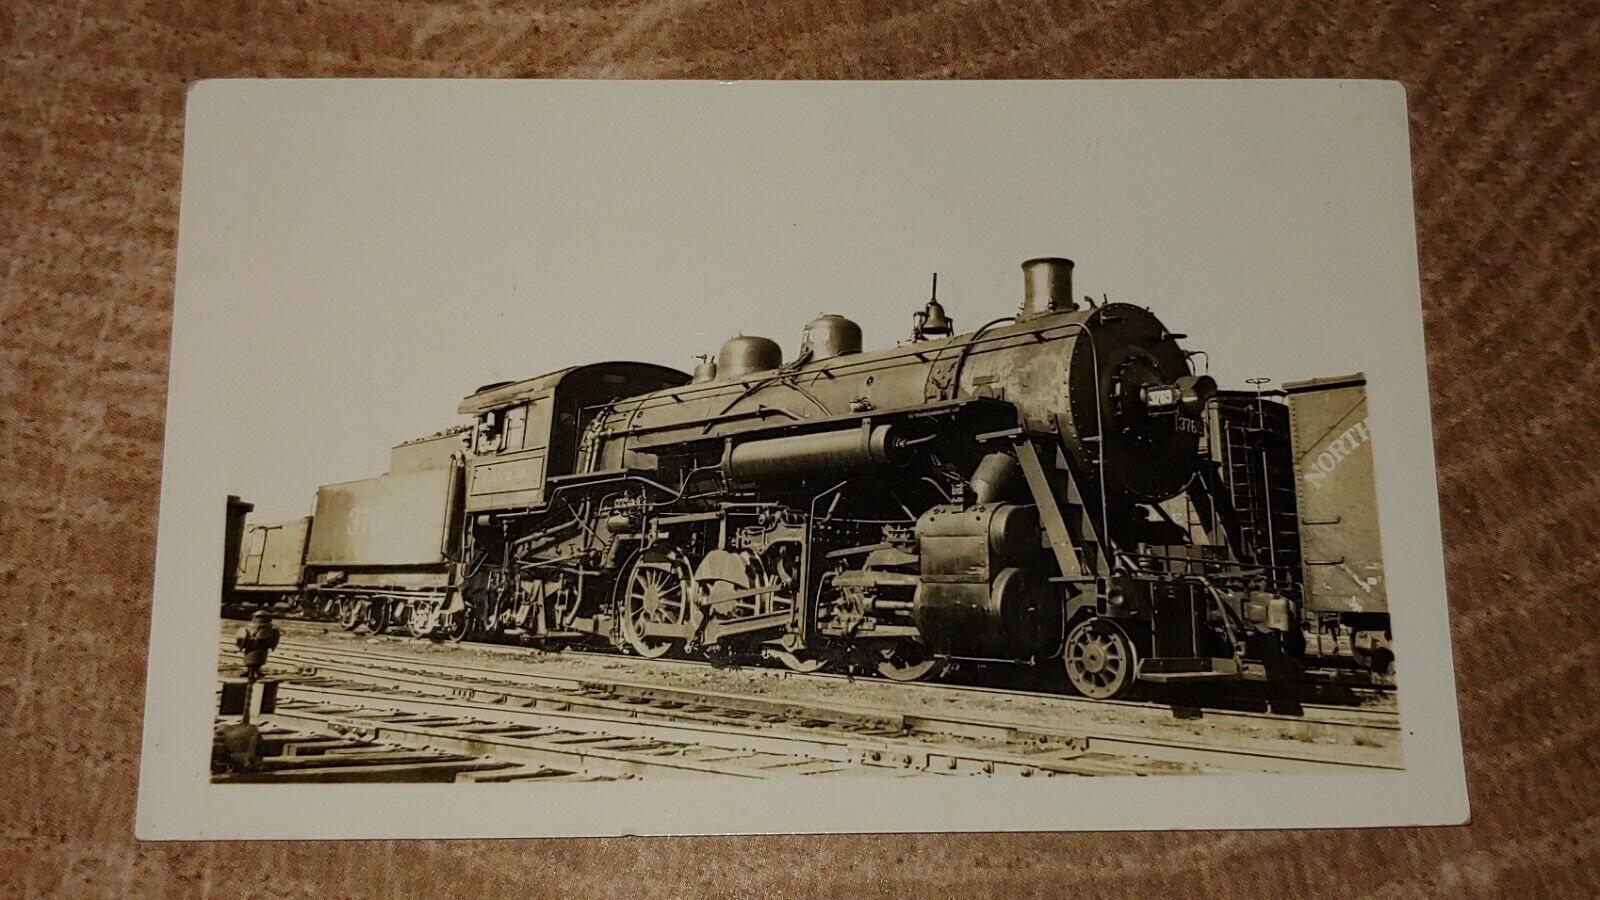 Antq. Black & White Photograph Of Locomotive Train I.C.R.R #3769 Dated 1937